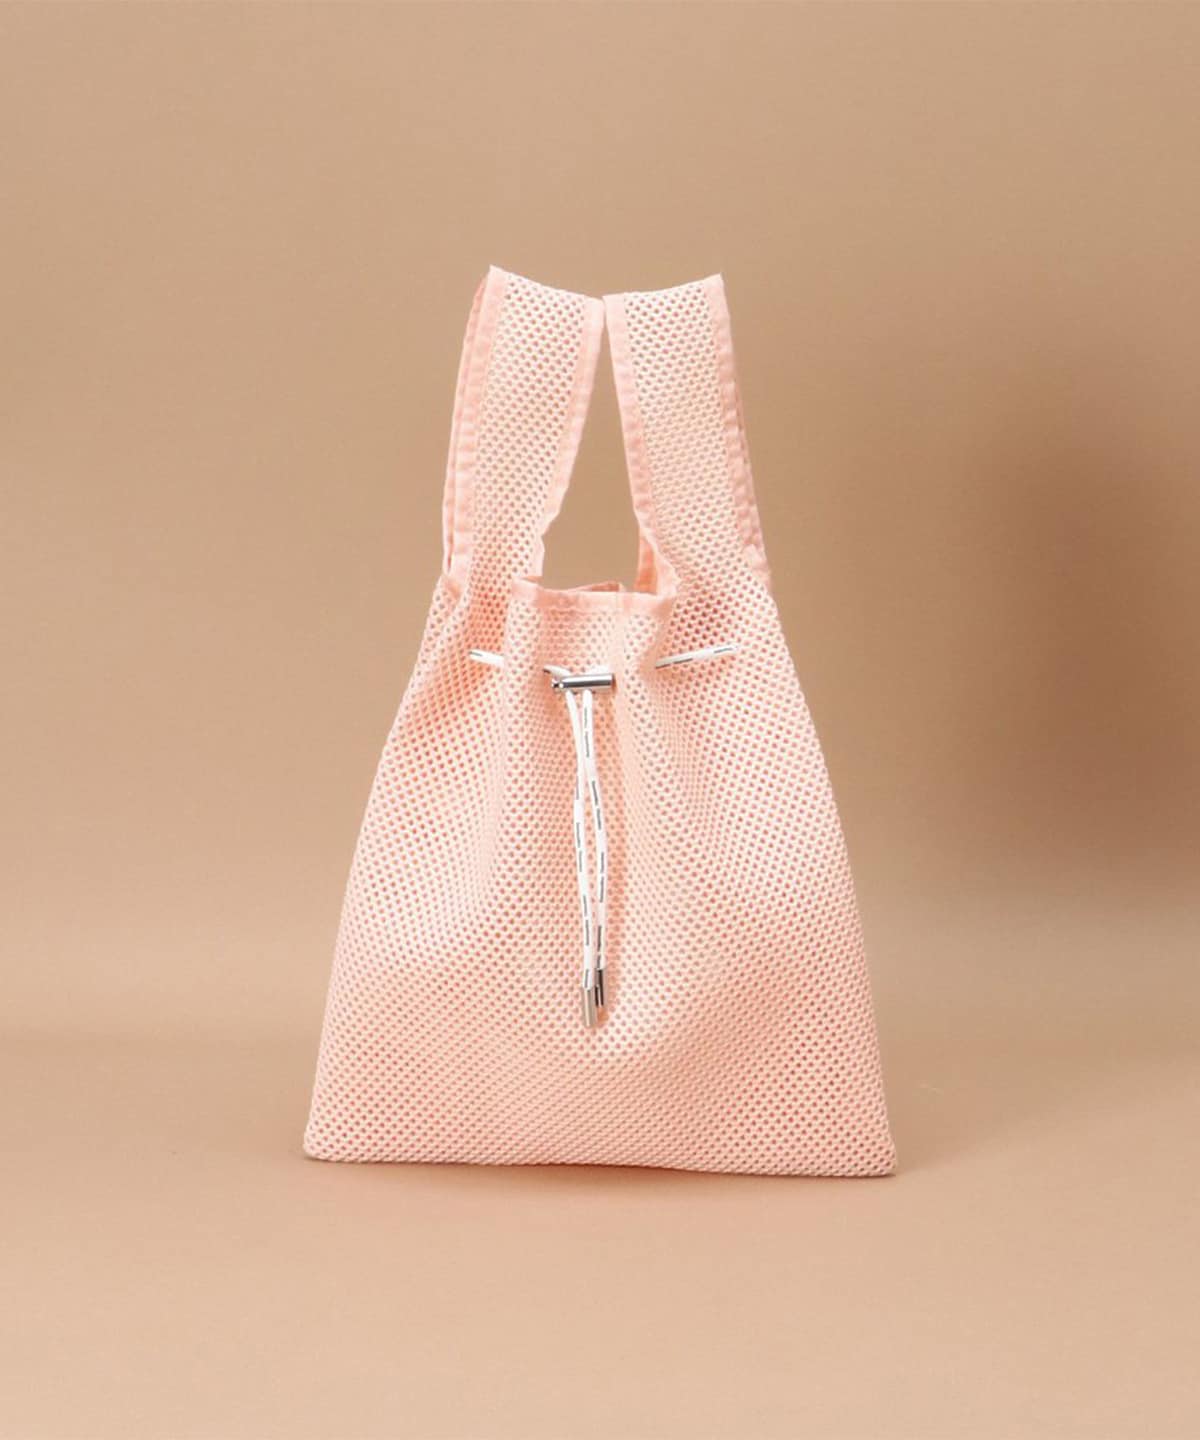 Dream bag for キャンバストートⅡ 大サイズ(FREE ピンク): Samantha 